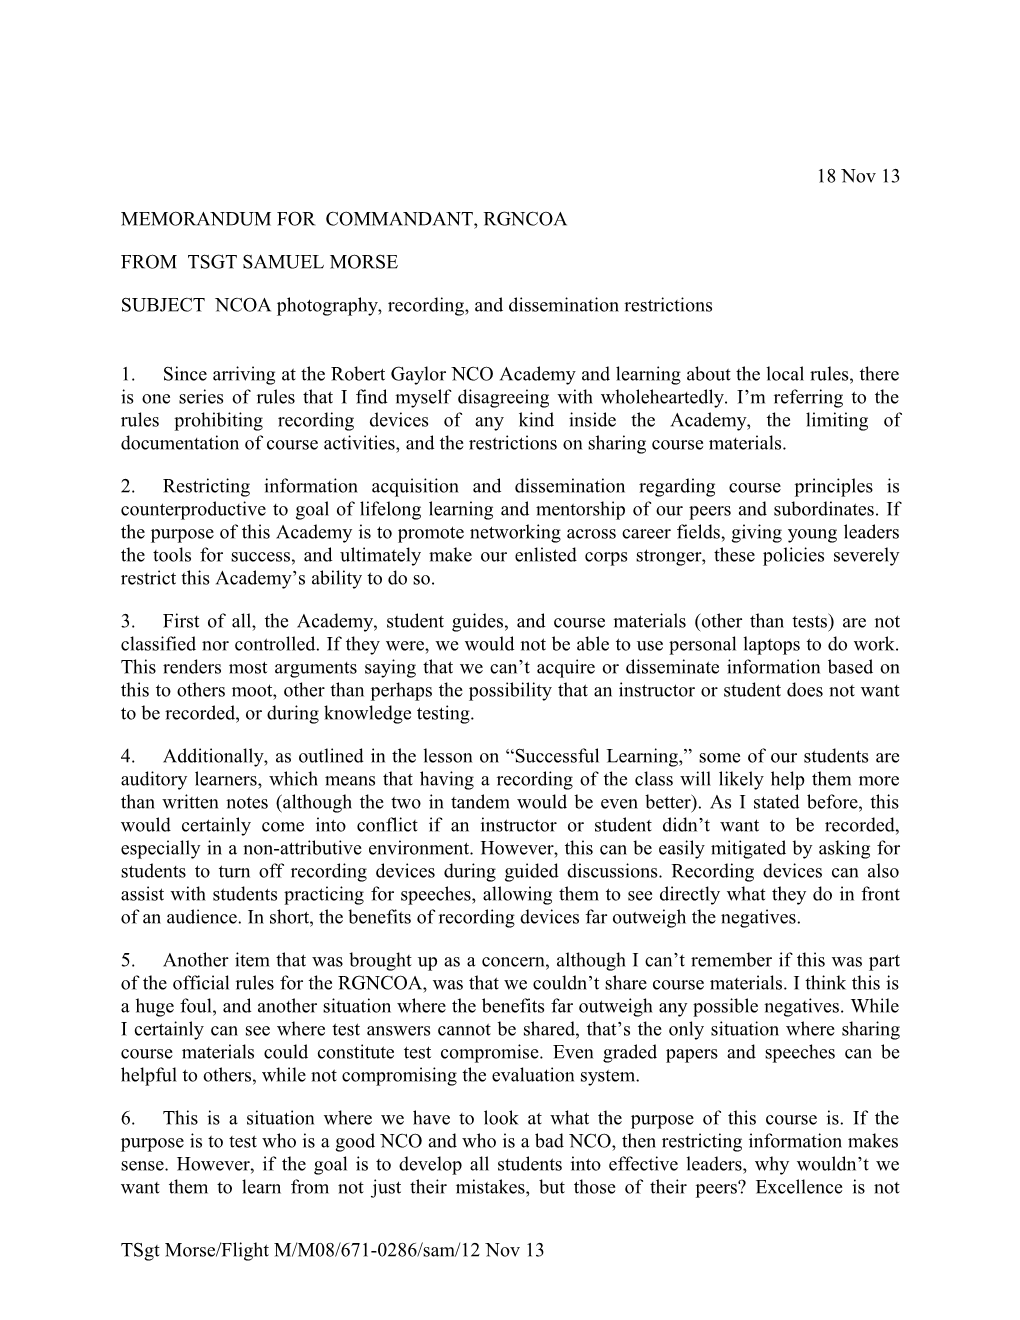 Memorandum for Commandant, Rgncoa